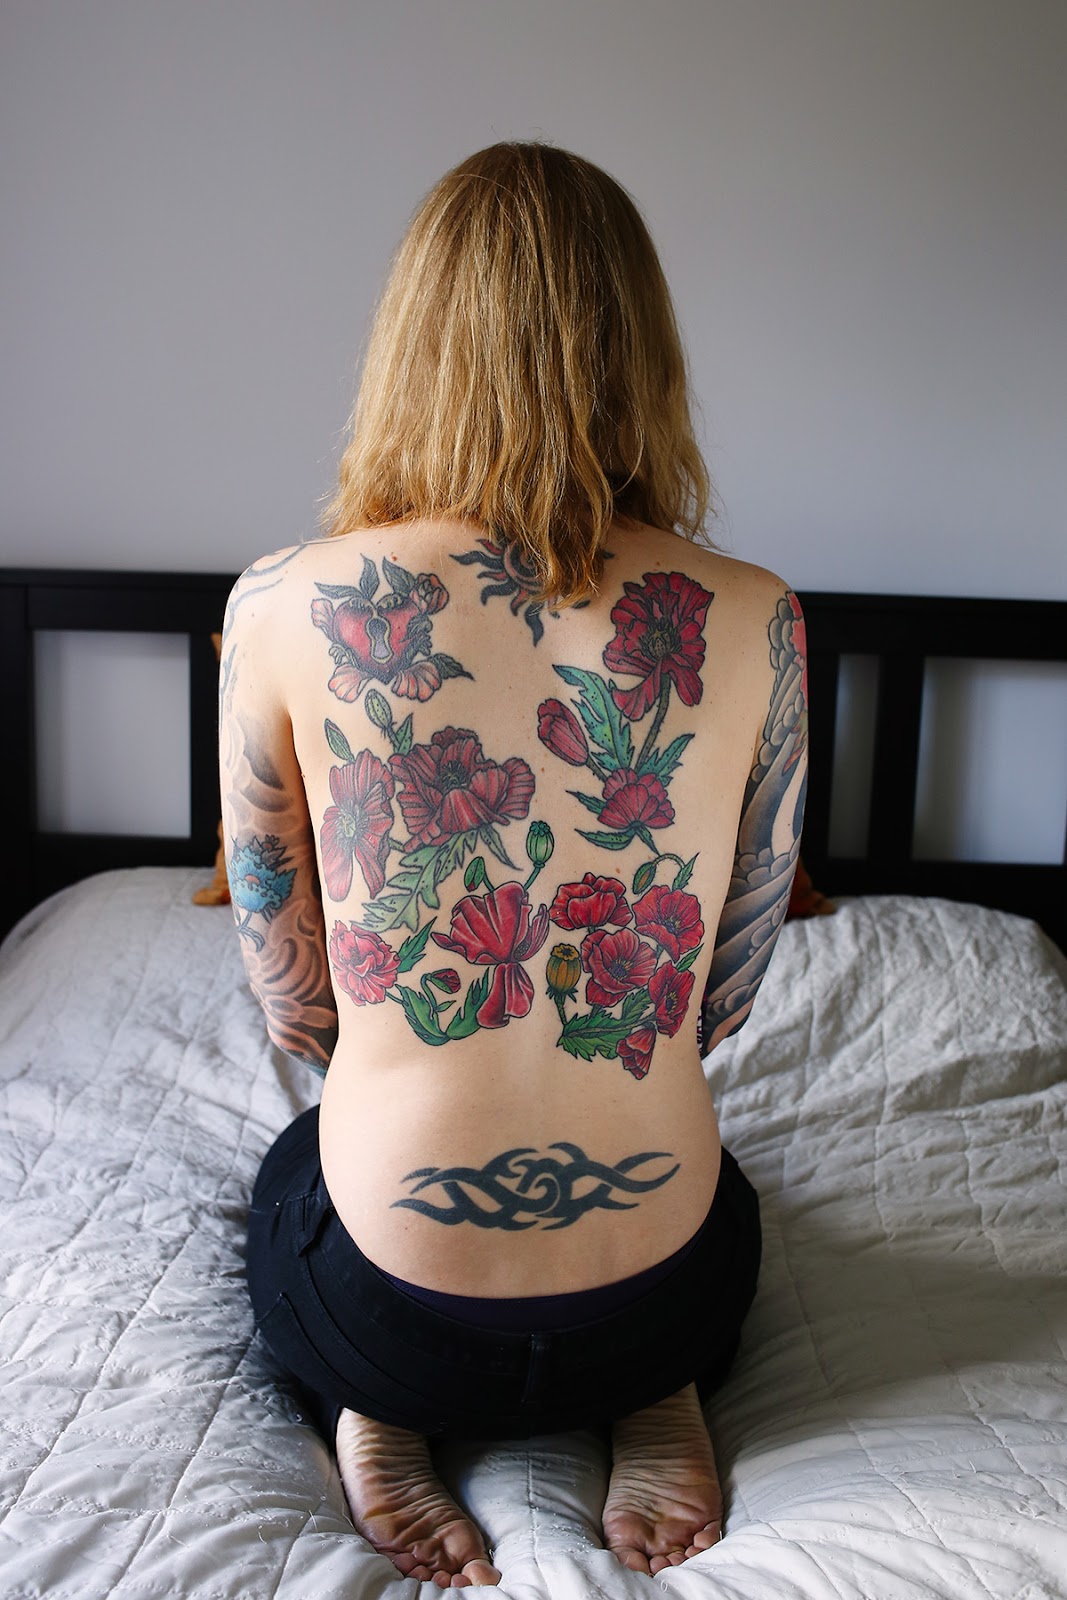 J.H.Ditchfield - Healed for Anna 👍 #tattoo #tattoos #tattoosofinstagram  #natureillustration #design #art #drawing #illustration  #scientificillustration #2021 #lineworktattoo #British #etching #instaart  #nature #tattooart #iblackwork #tattoodesign ...